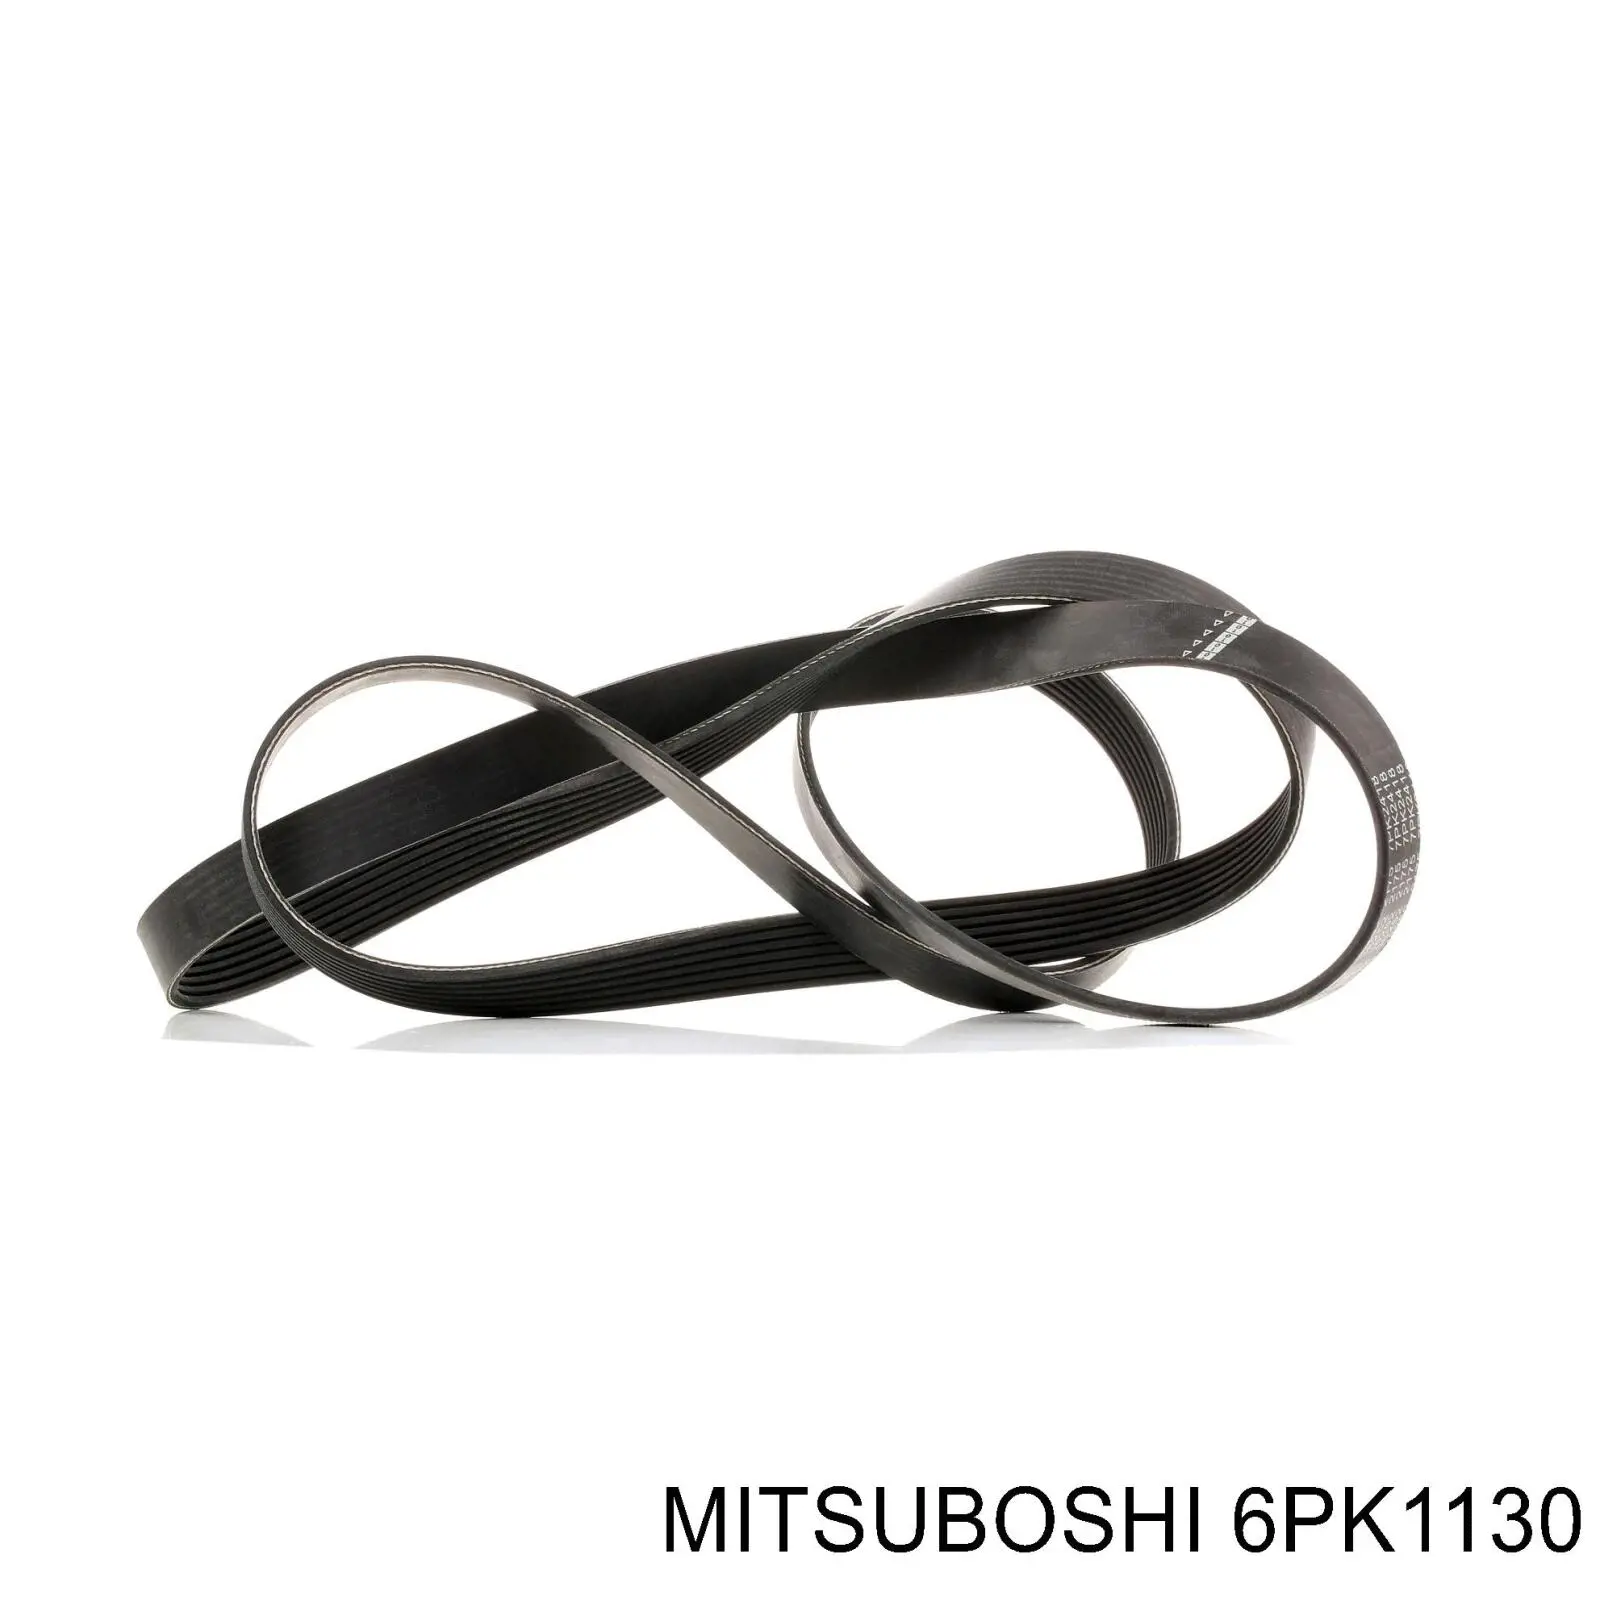 6PK1130 Mitsuboshi correa trapezoidal